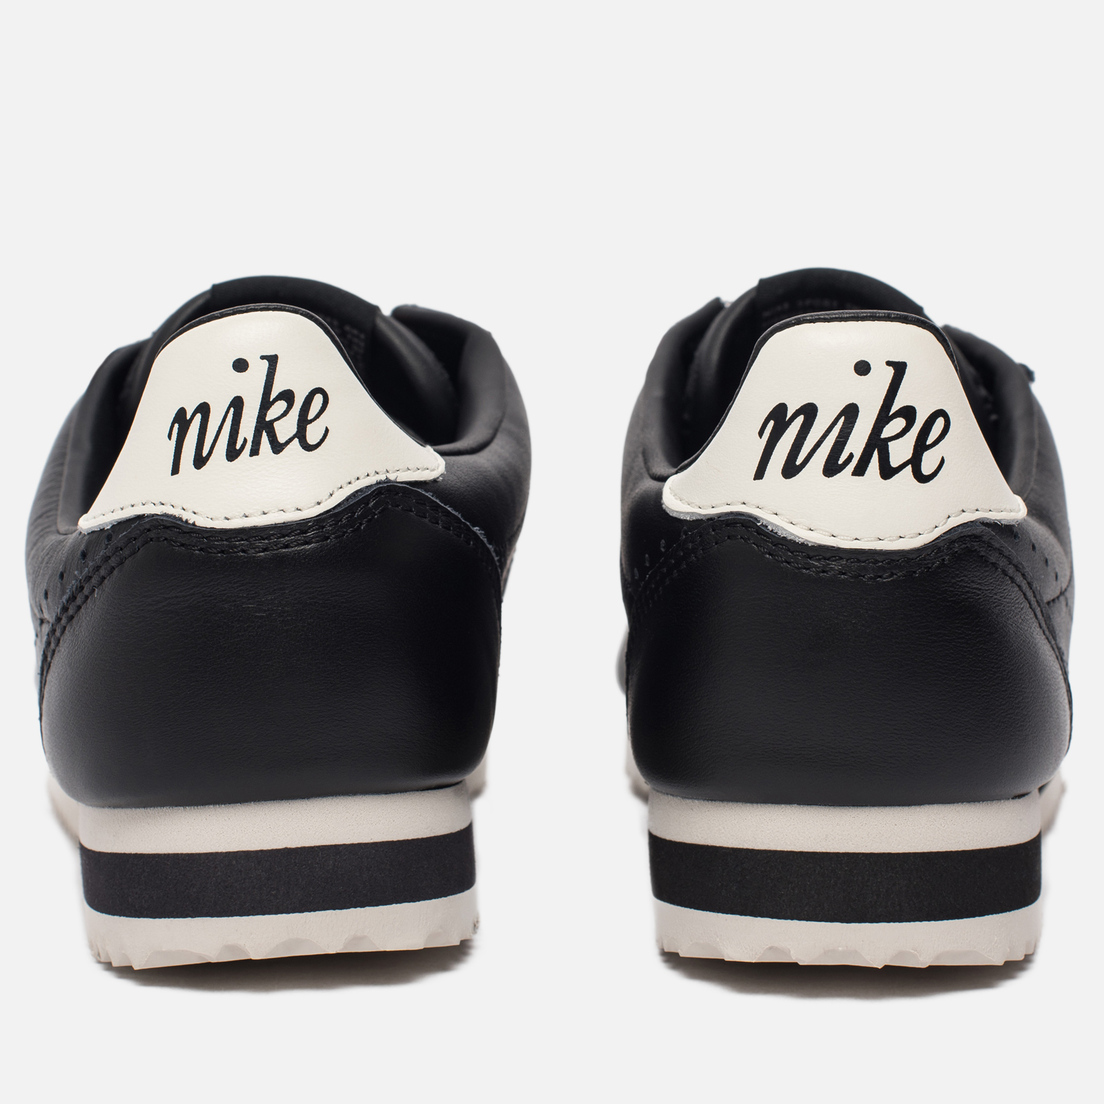 Nike Мужские кроссовки Classic Cortez Leather Premium